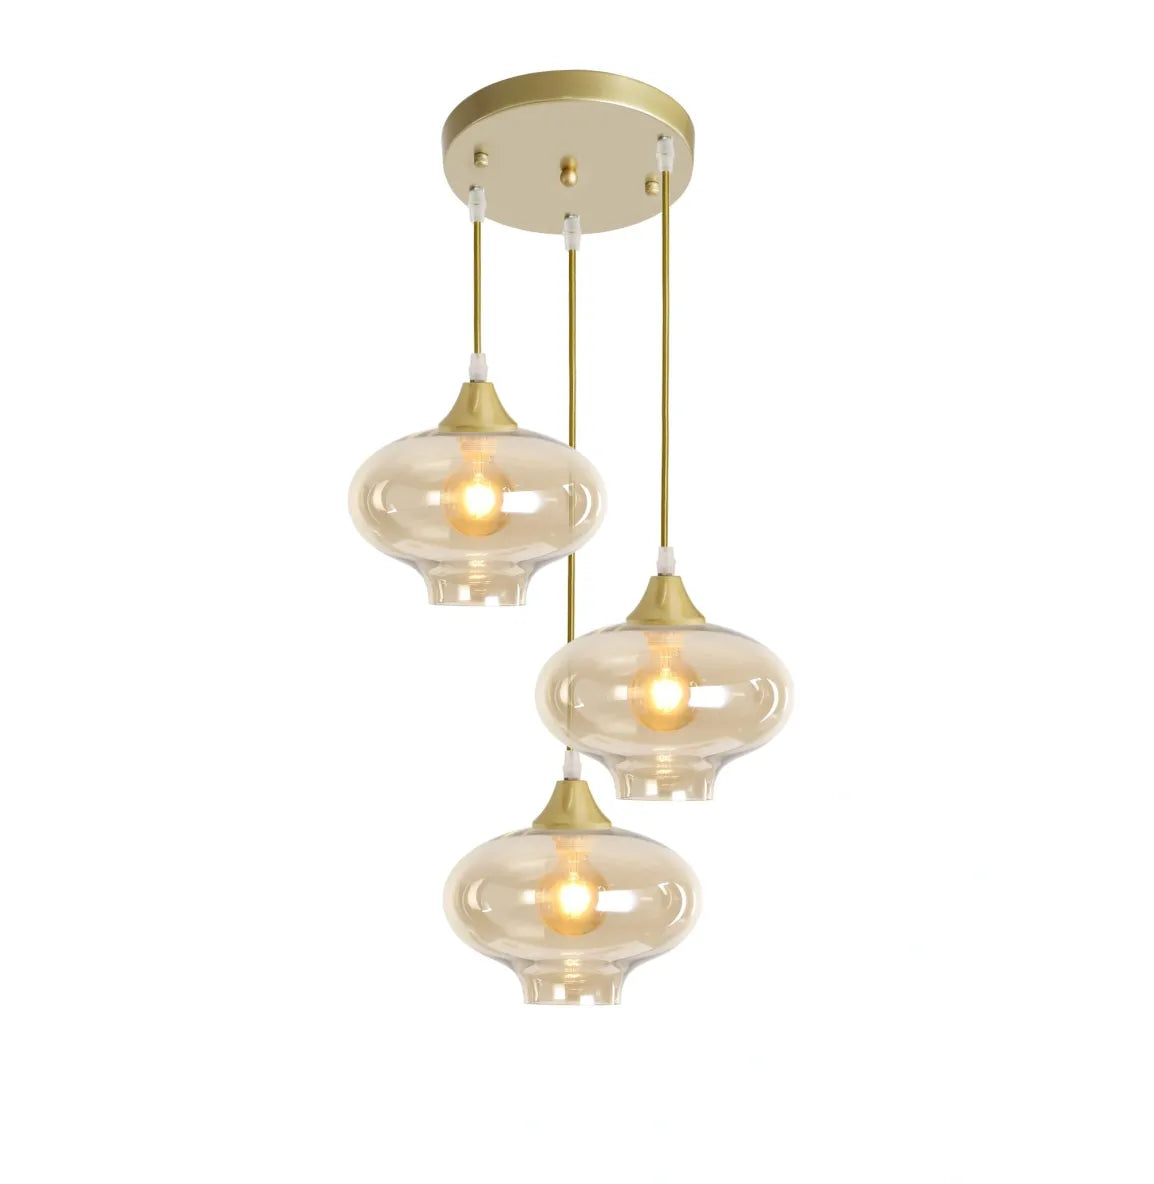 Murano 3 Light Gold Pendant With Teardrop Glass Shades